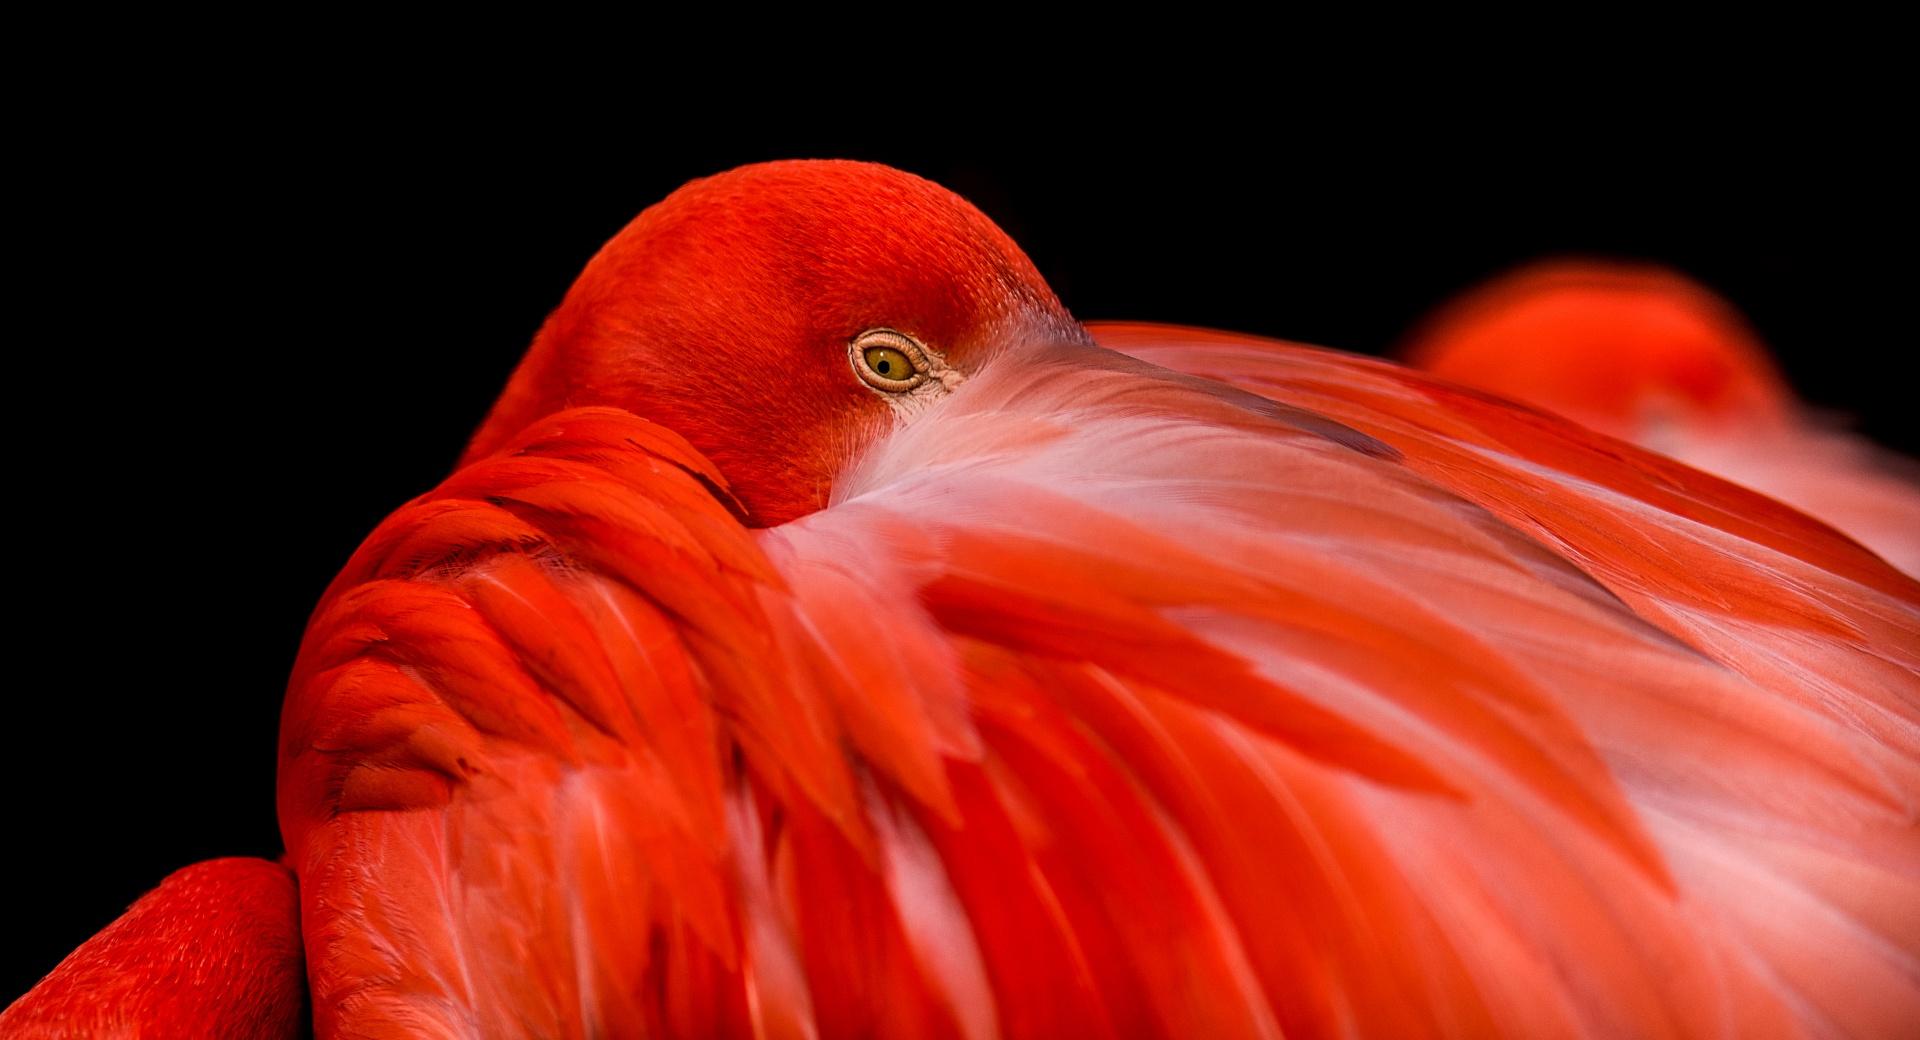 Flamingo Bird at 1024 x 1024 iPad size wallpapers HD quality